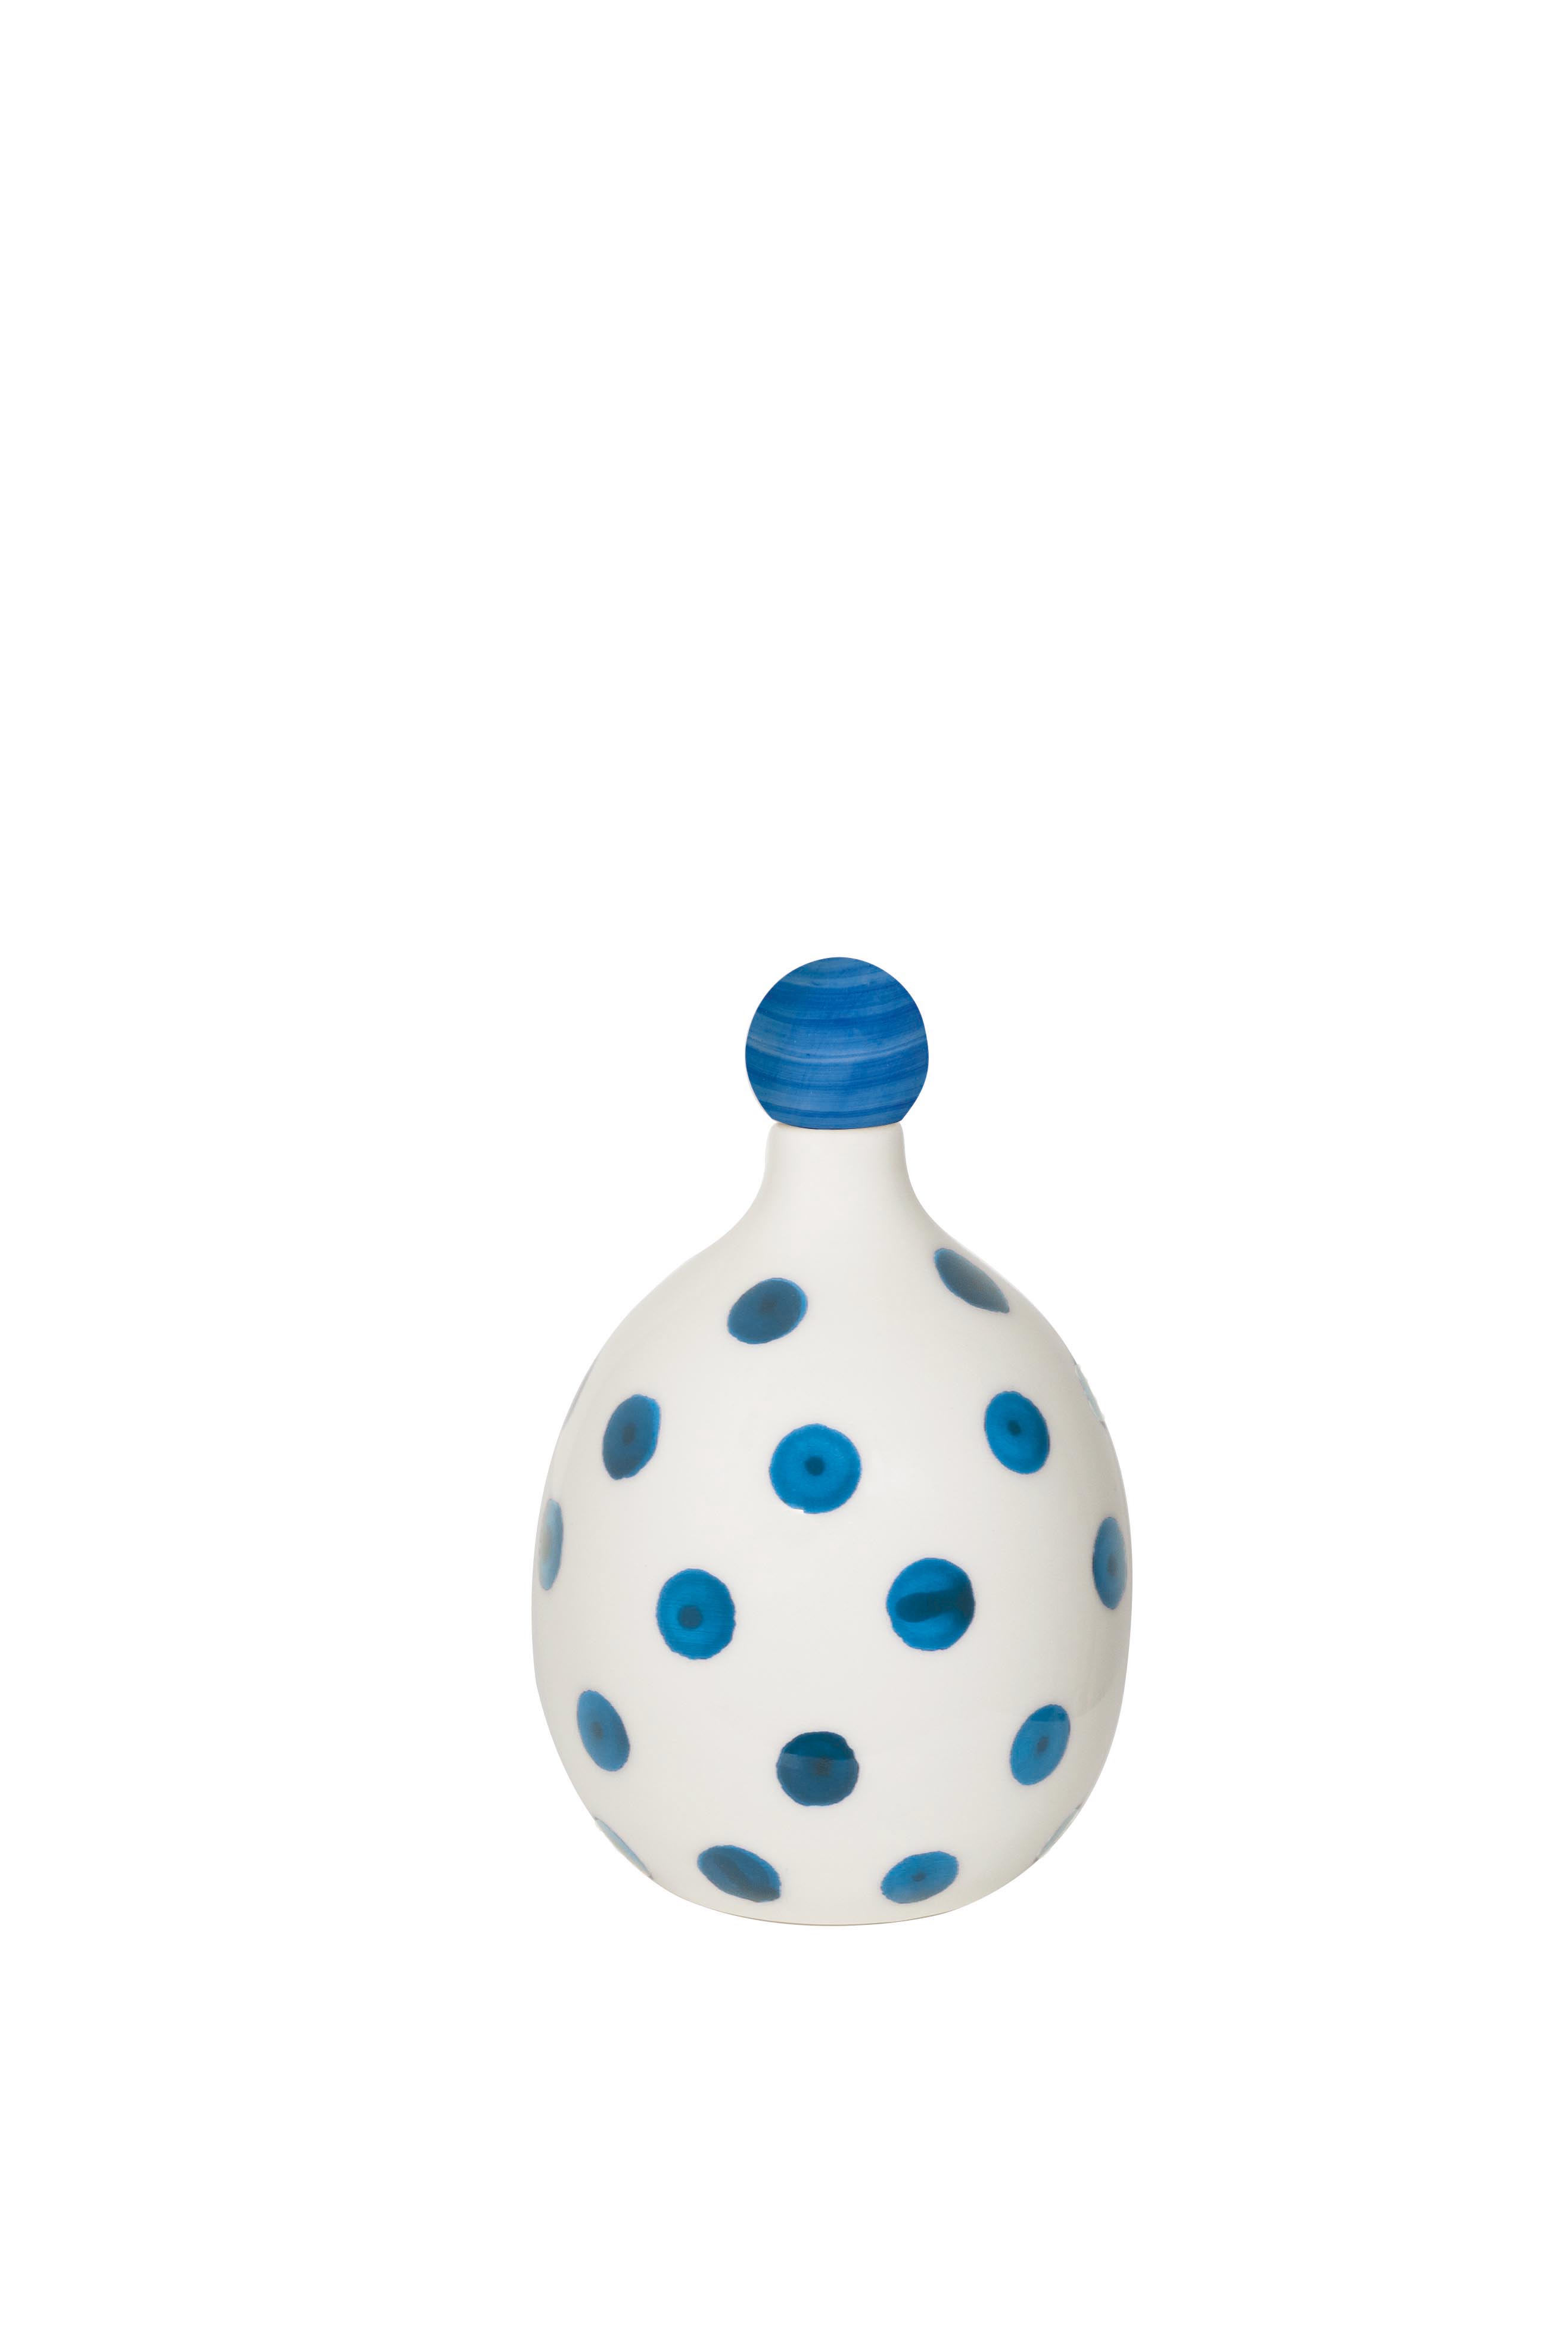 Zafferano Poldina Stopper Blue Avio / Avio Blue + Lido Keramik Flasche mit Punkten in Blau